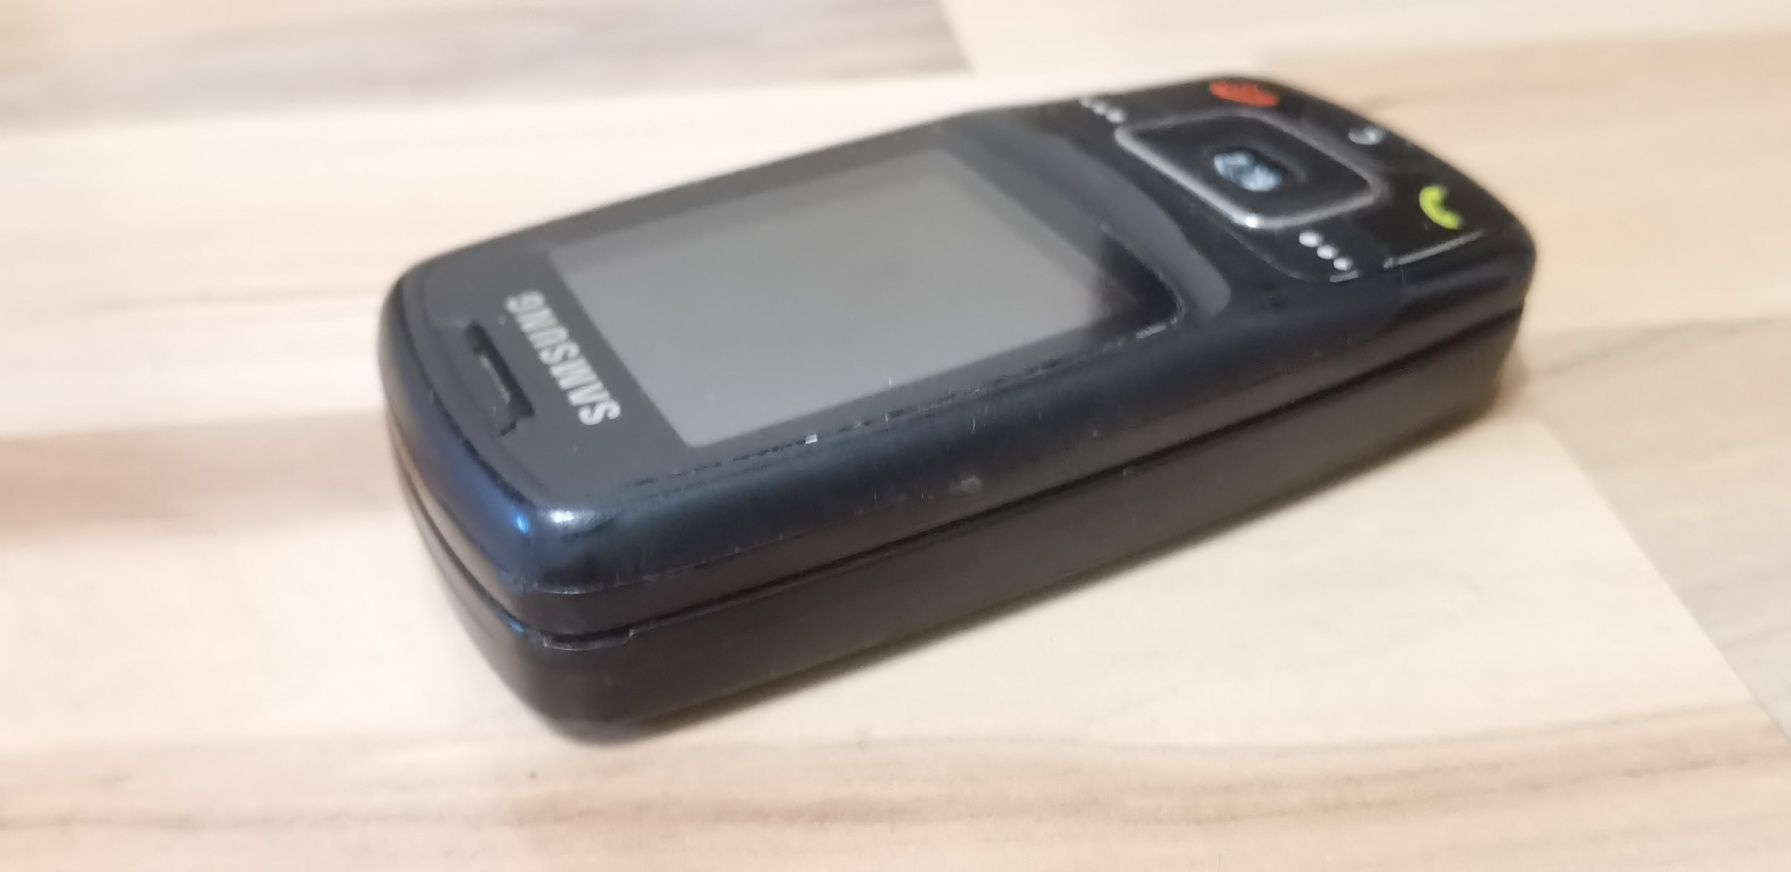 Telefon mobil Samsung SGH 300 slide retro de colecție